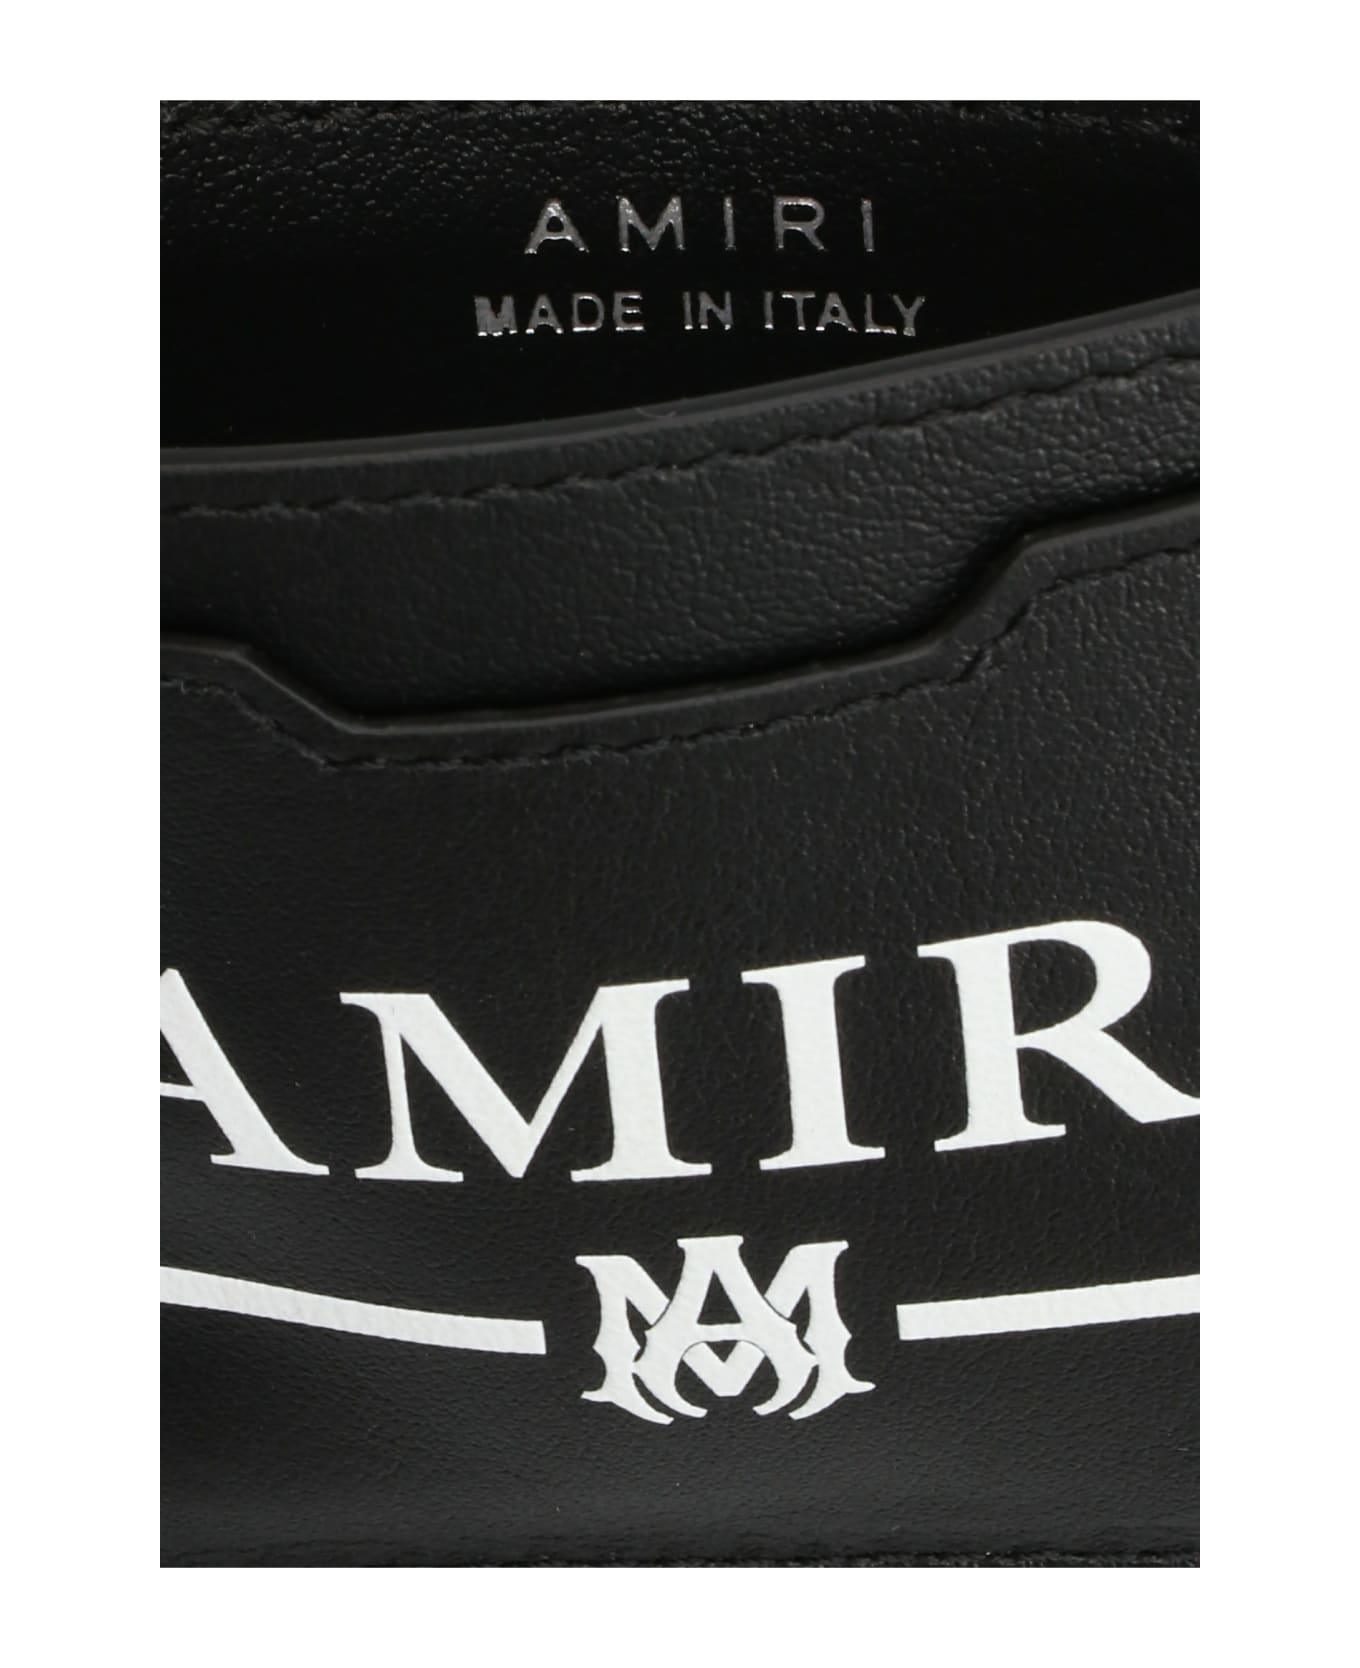 AMIRI Logo Print Card Holder - White/Black